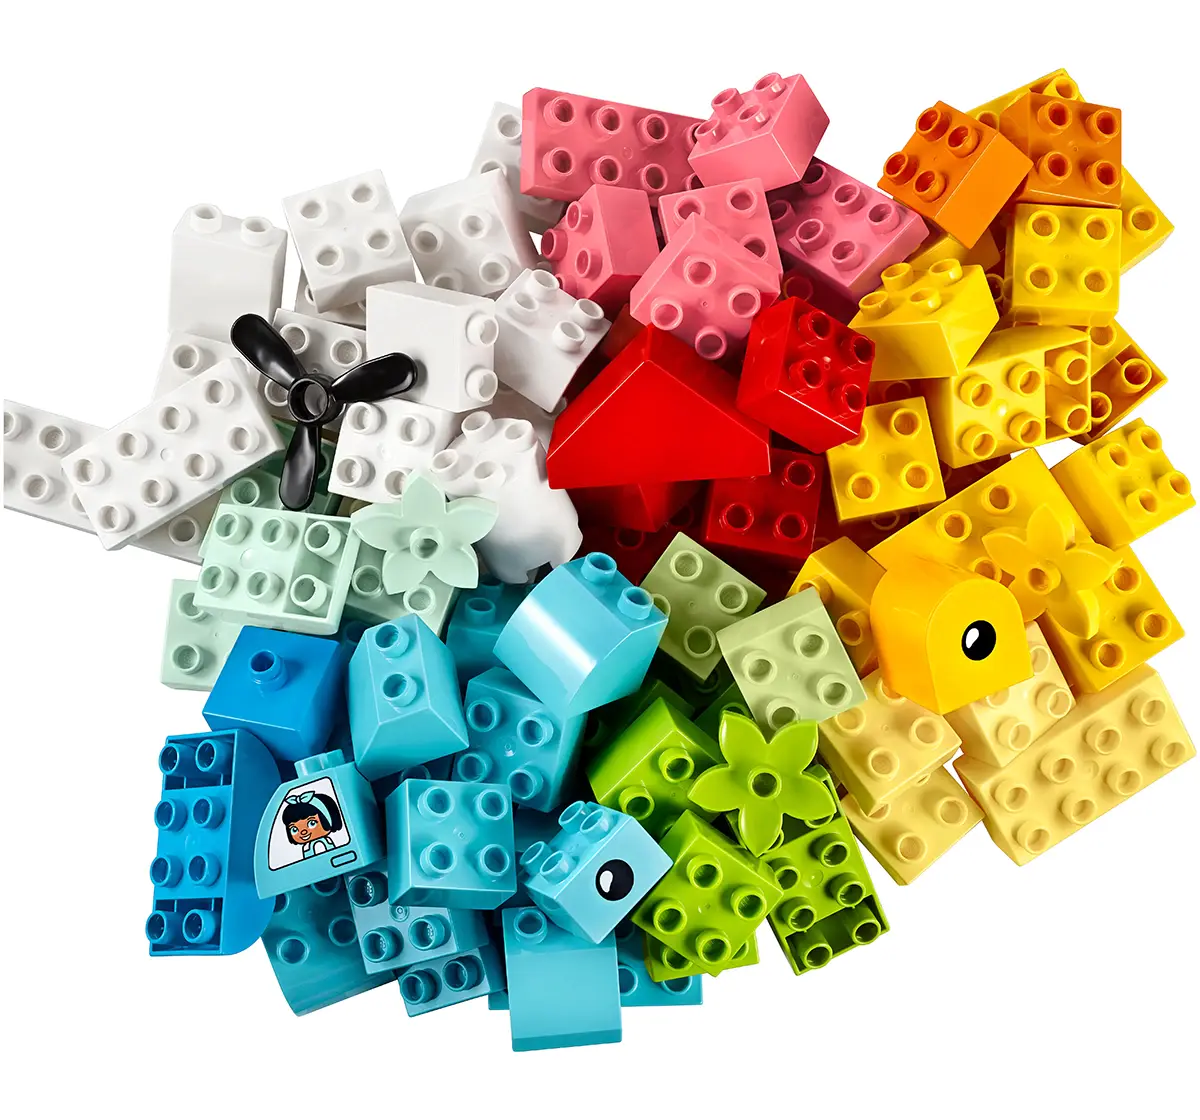 Lego Duplo Classic Heart Box 10909 Building Toy Set (80 Pieces), 15M+